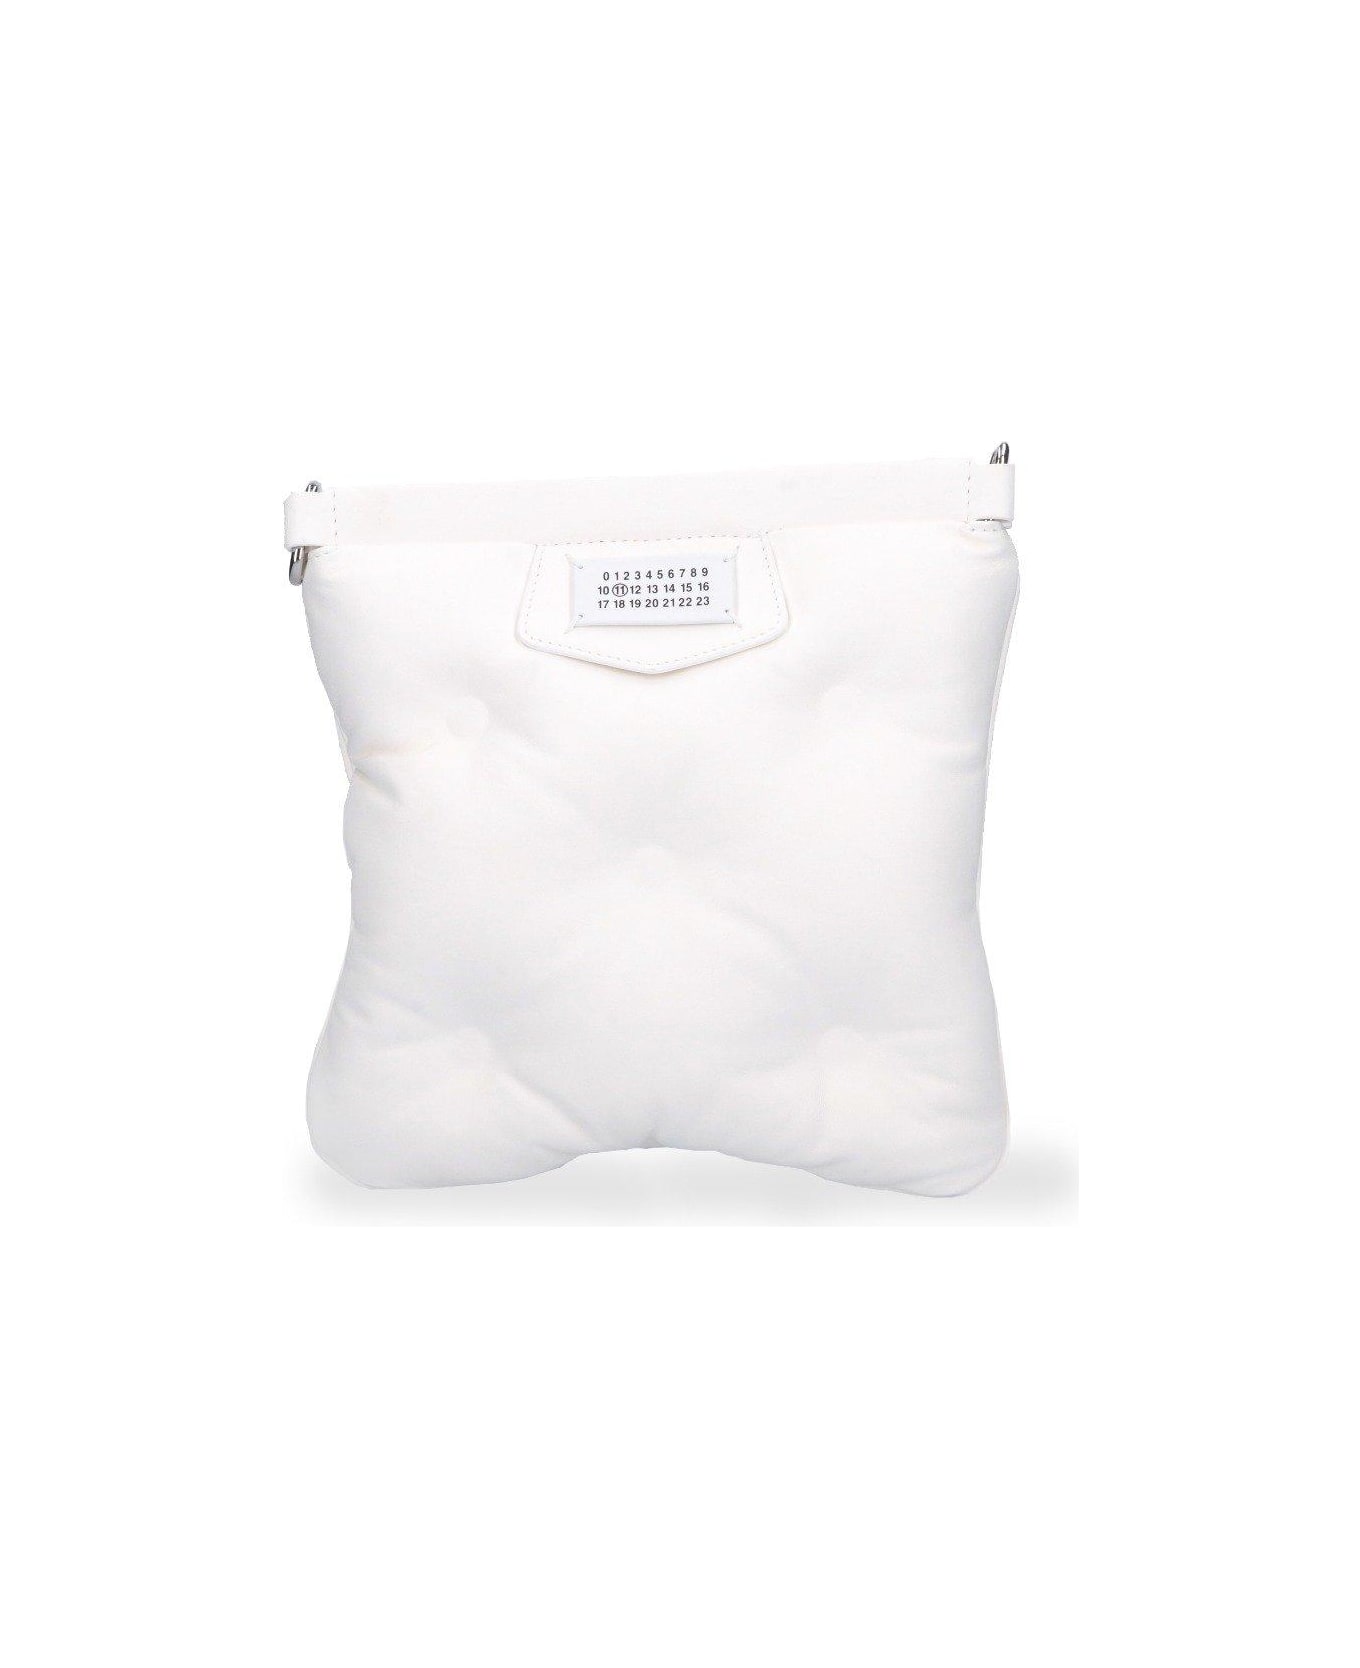 Maison Margiela Glam Slam Logo Patch Messenger Bag - WHITE (White)